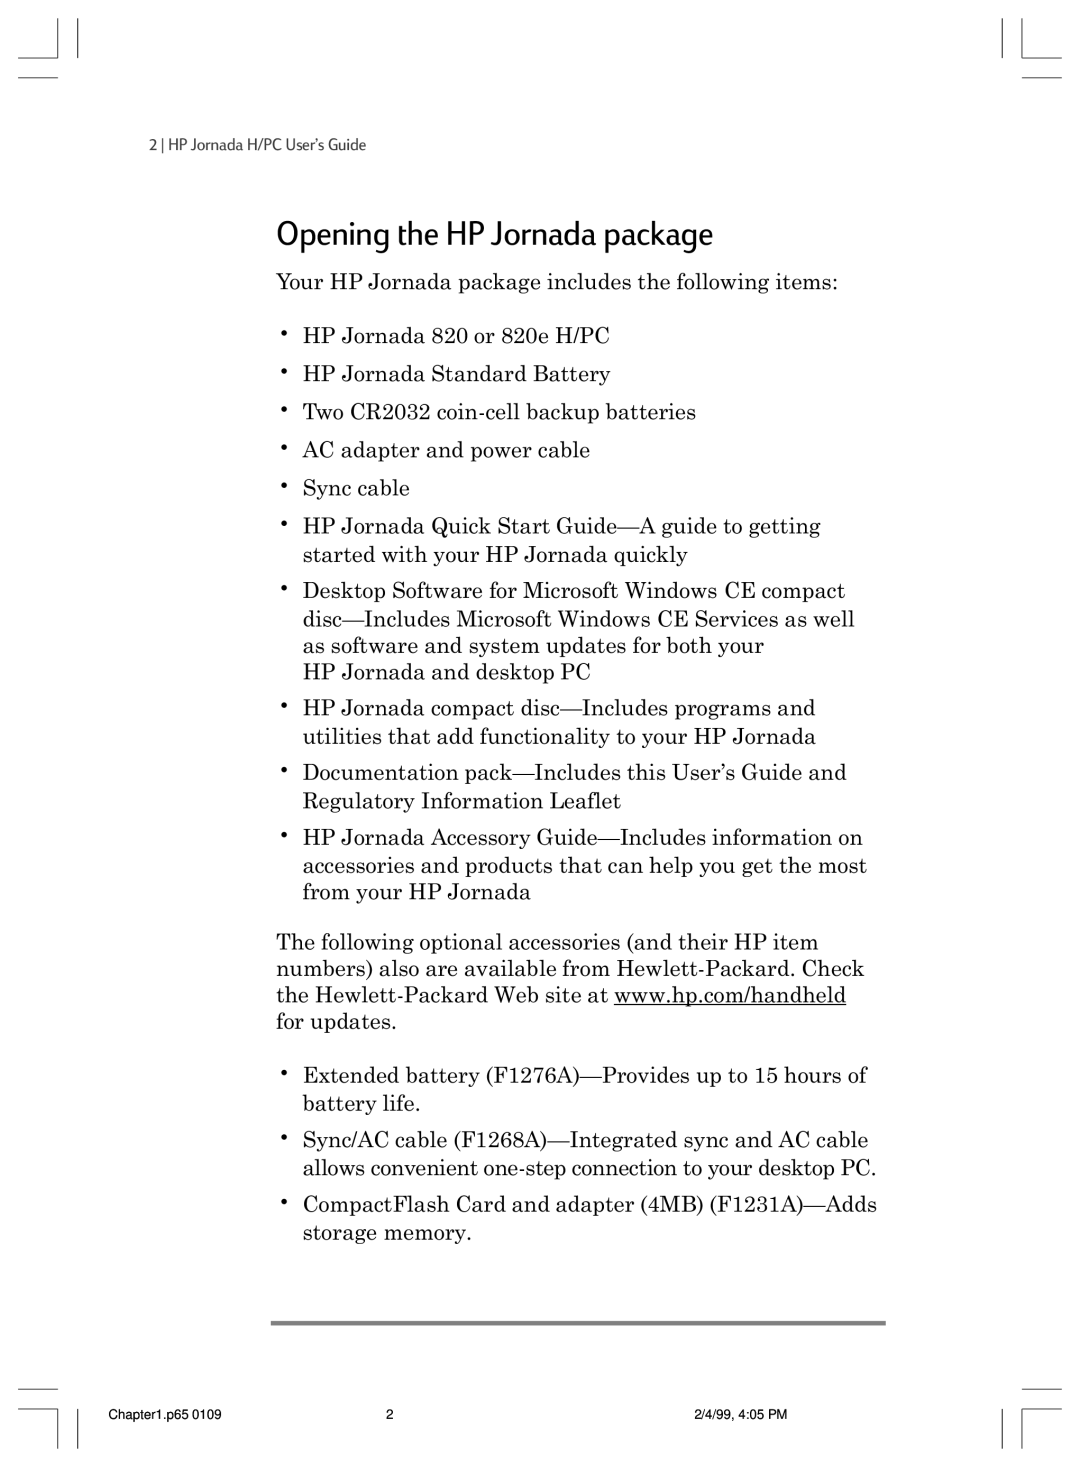 HP 820 E manual Opening the HP Jornada package 